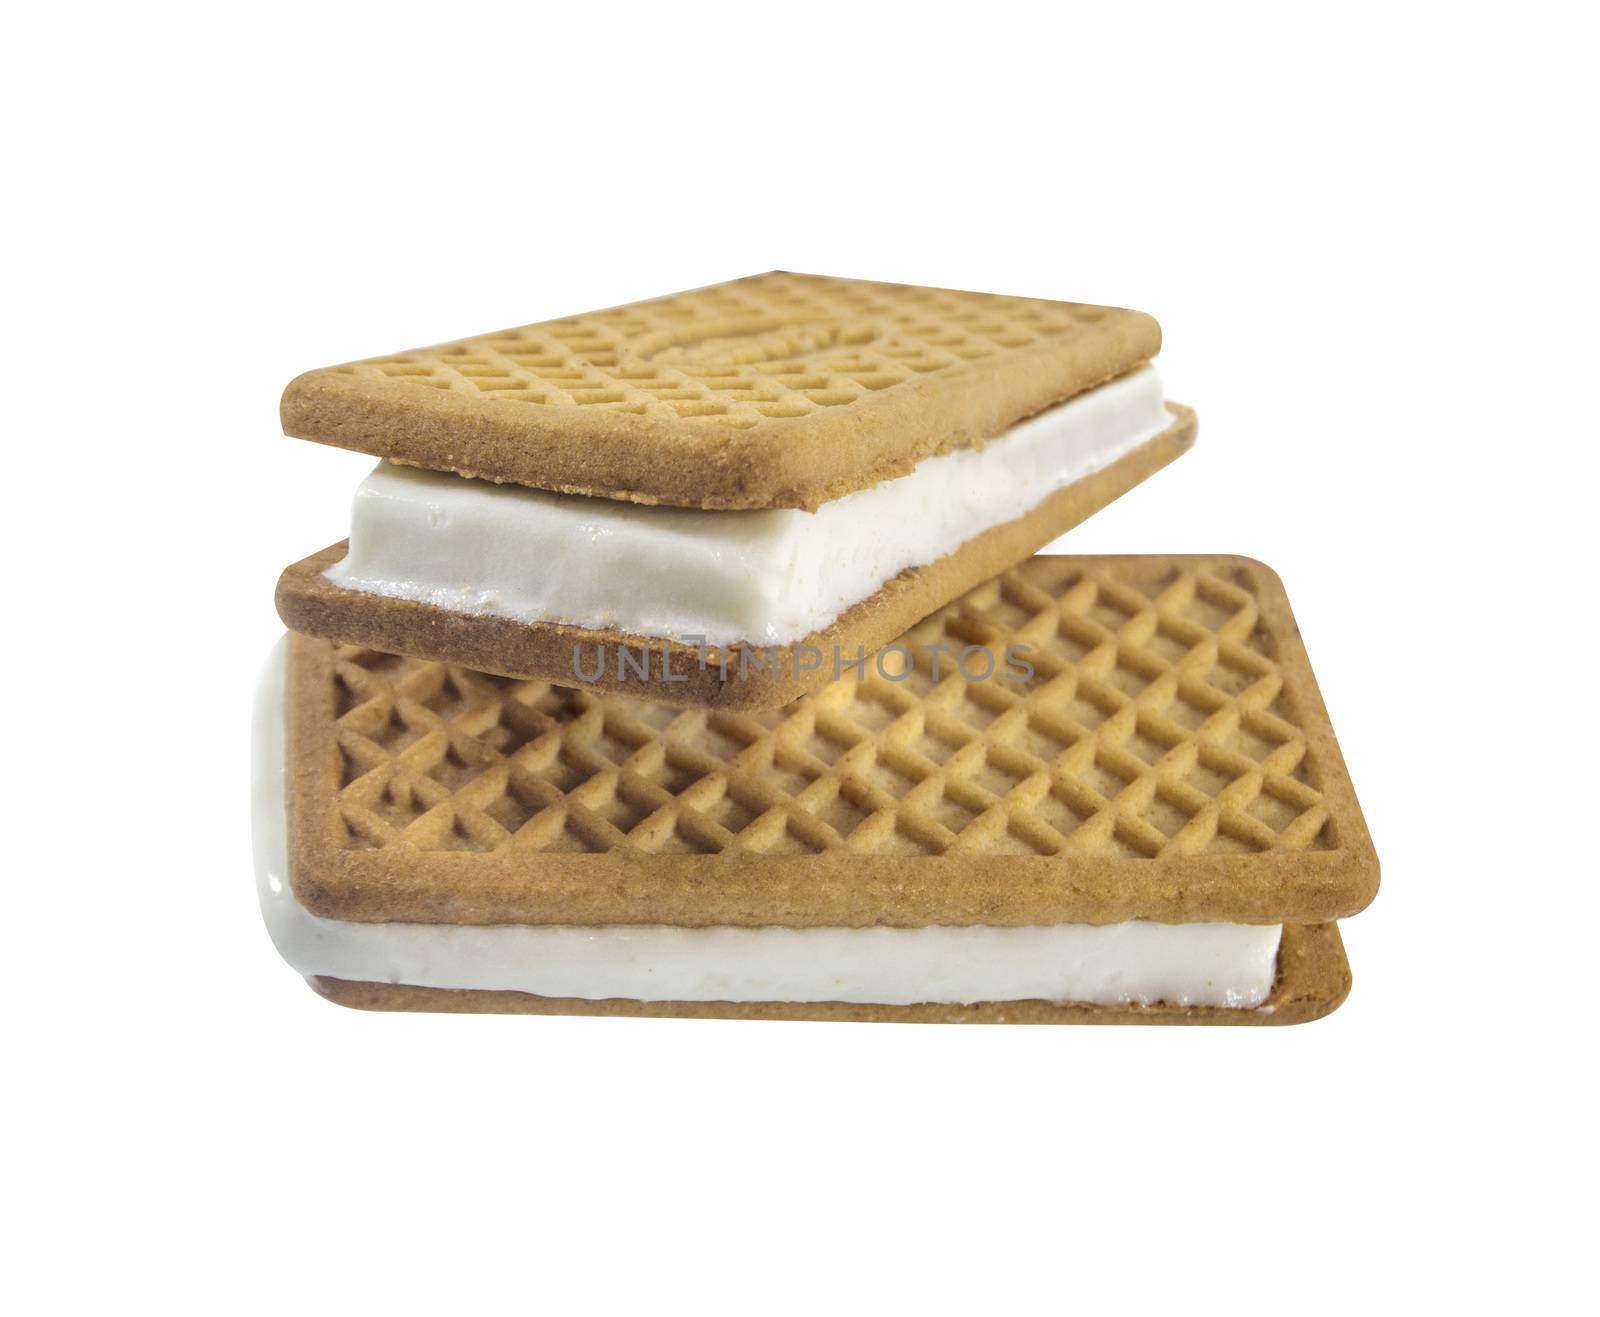 Vanilla and cookie ice cream sandwich bar on white background.